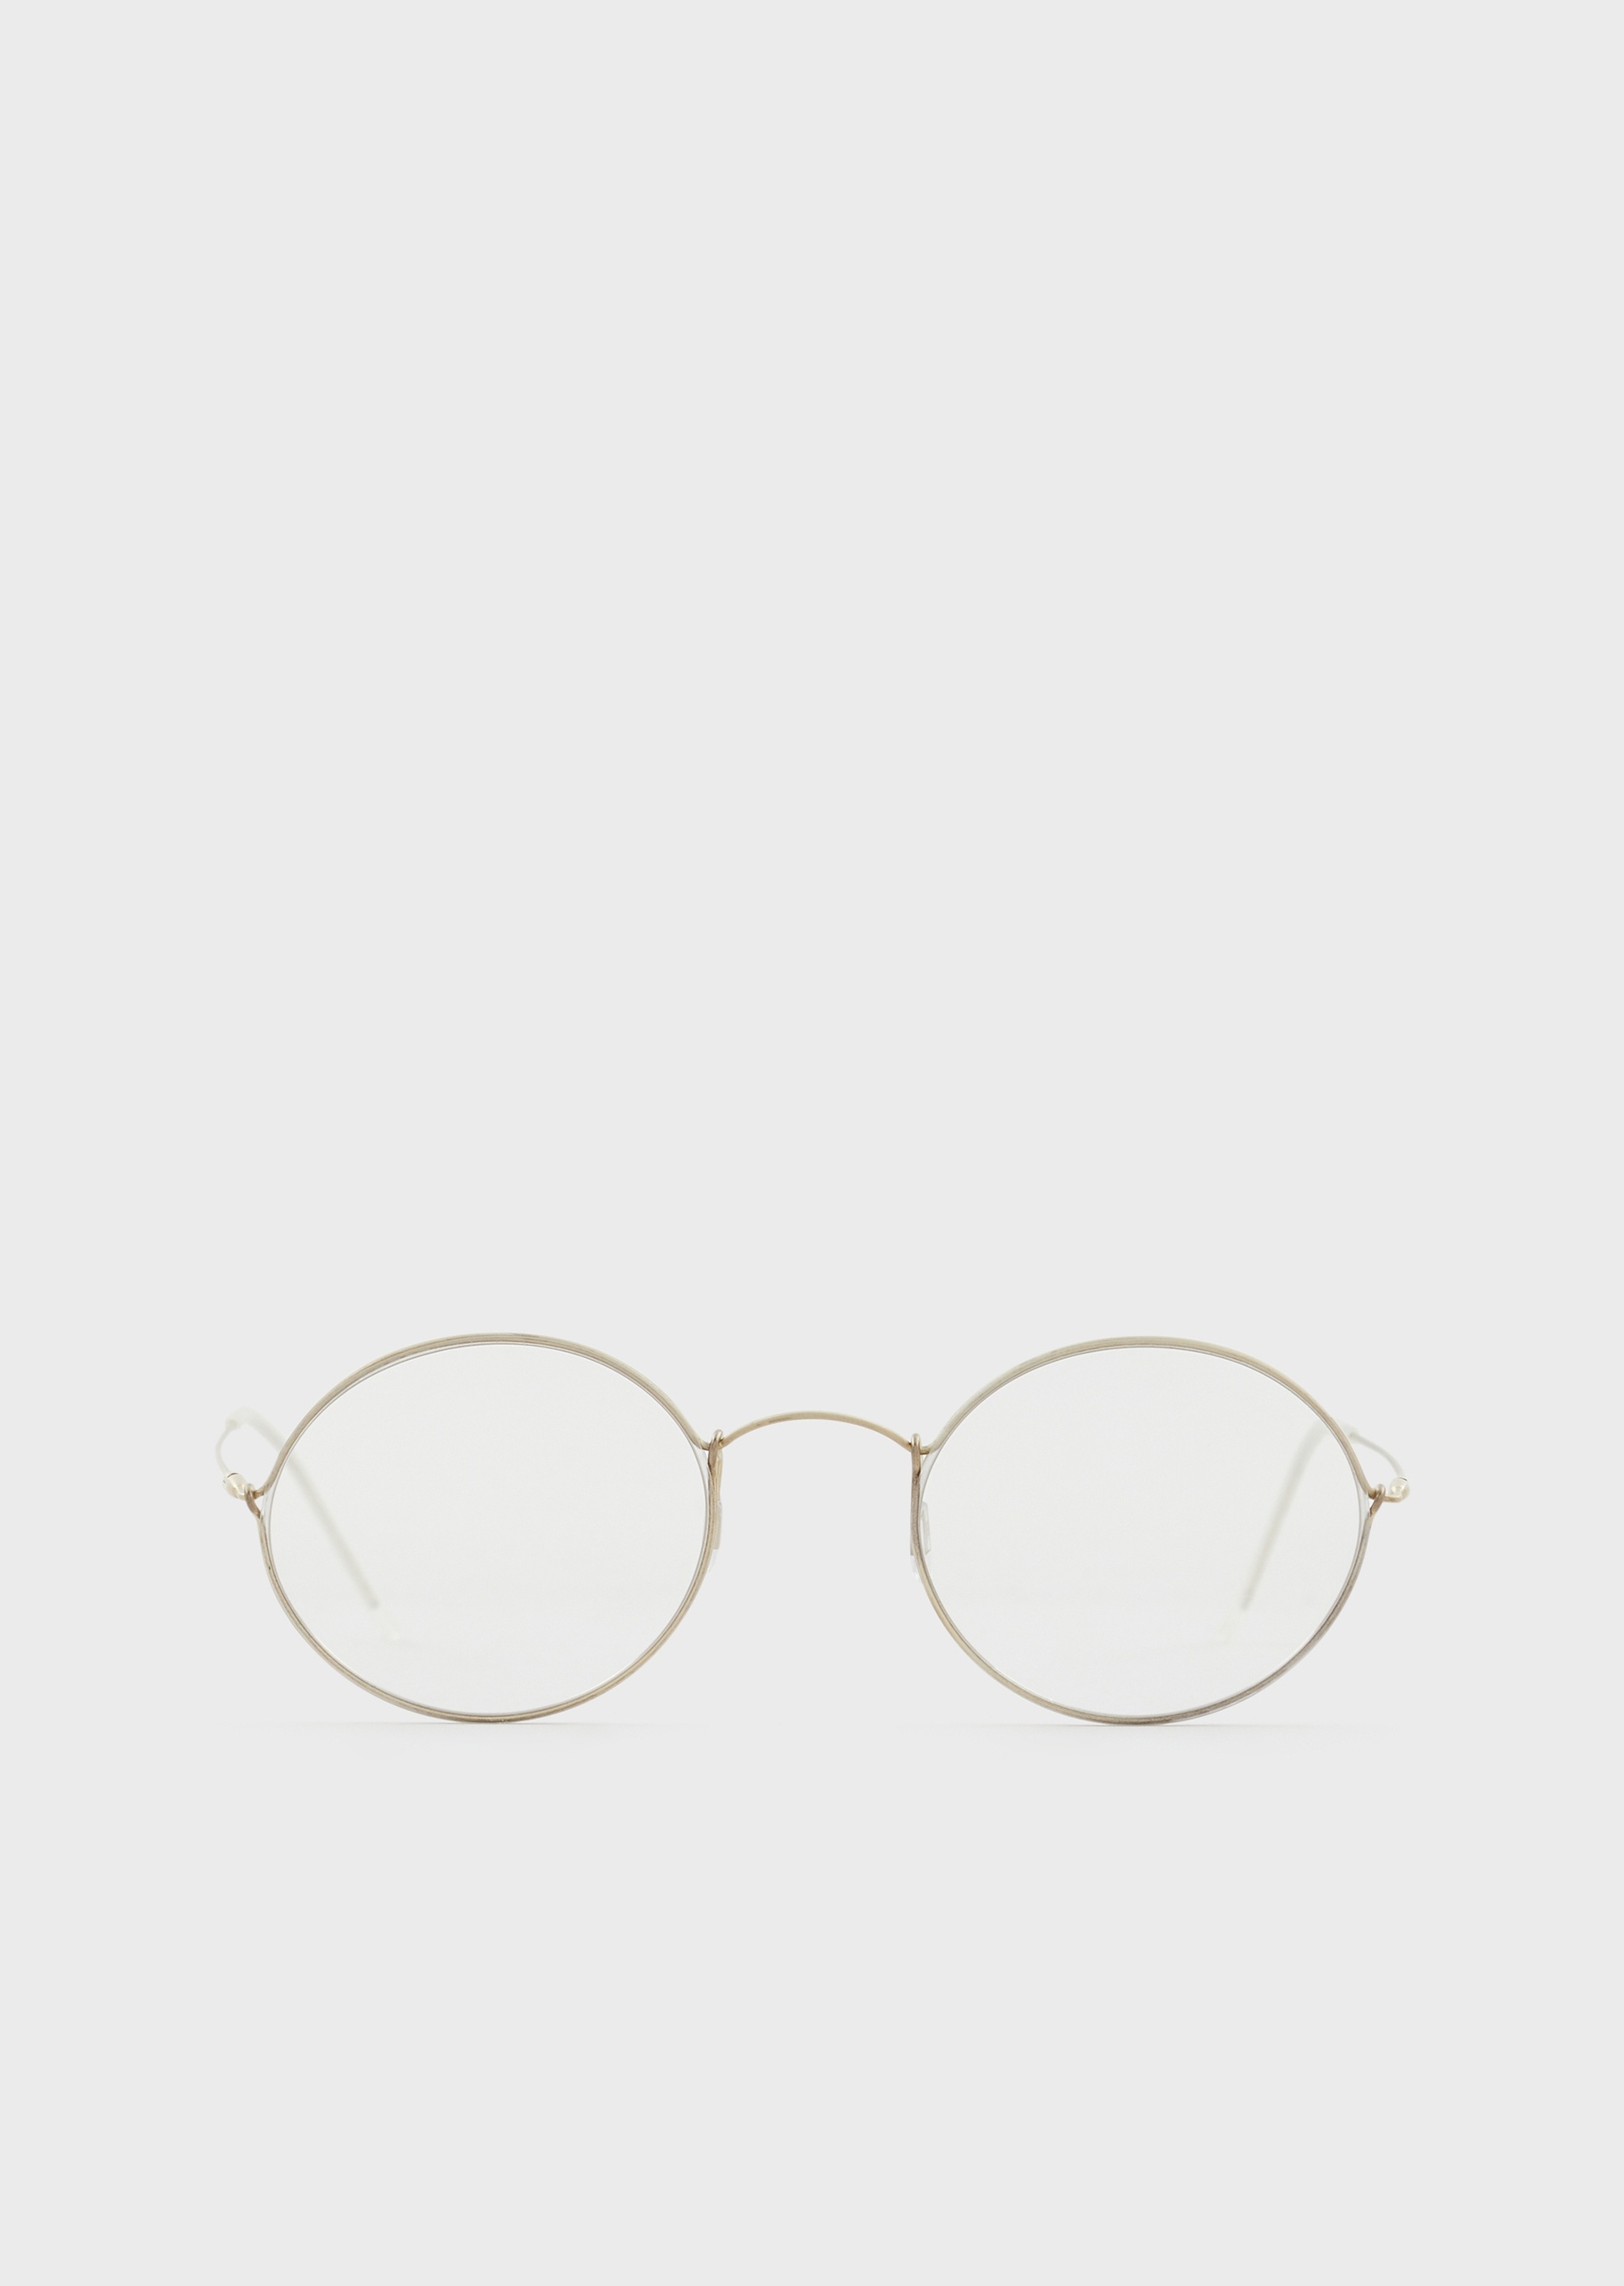 Giorgio Armani 经典时尚椭圆眼镜